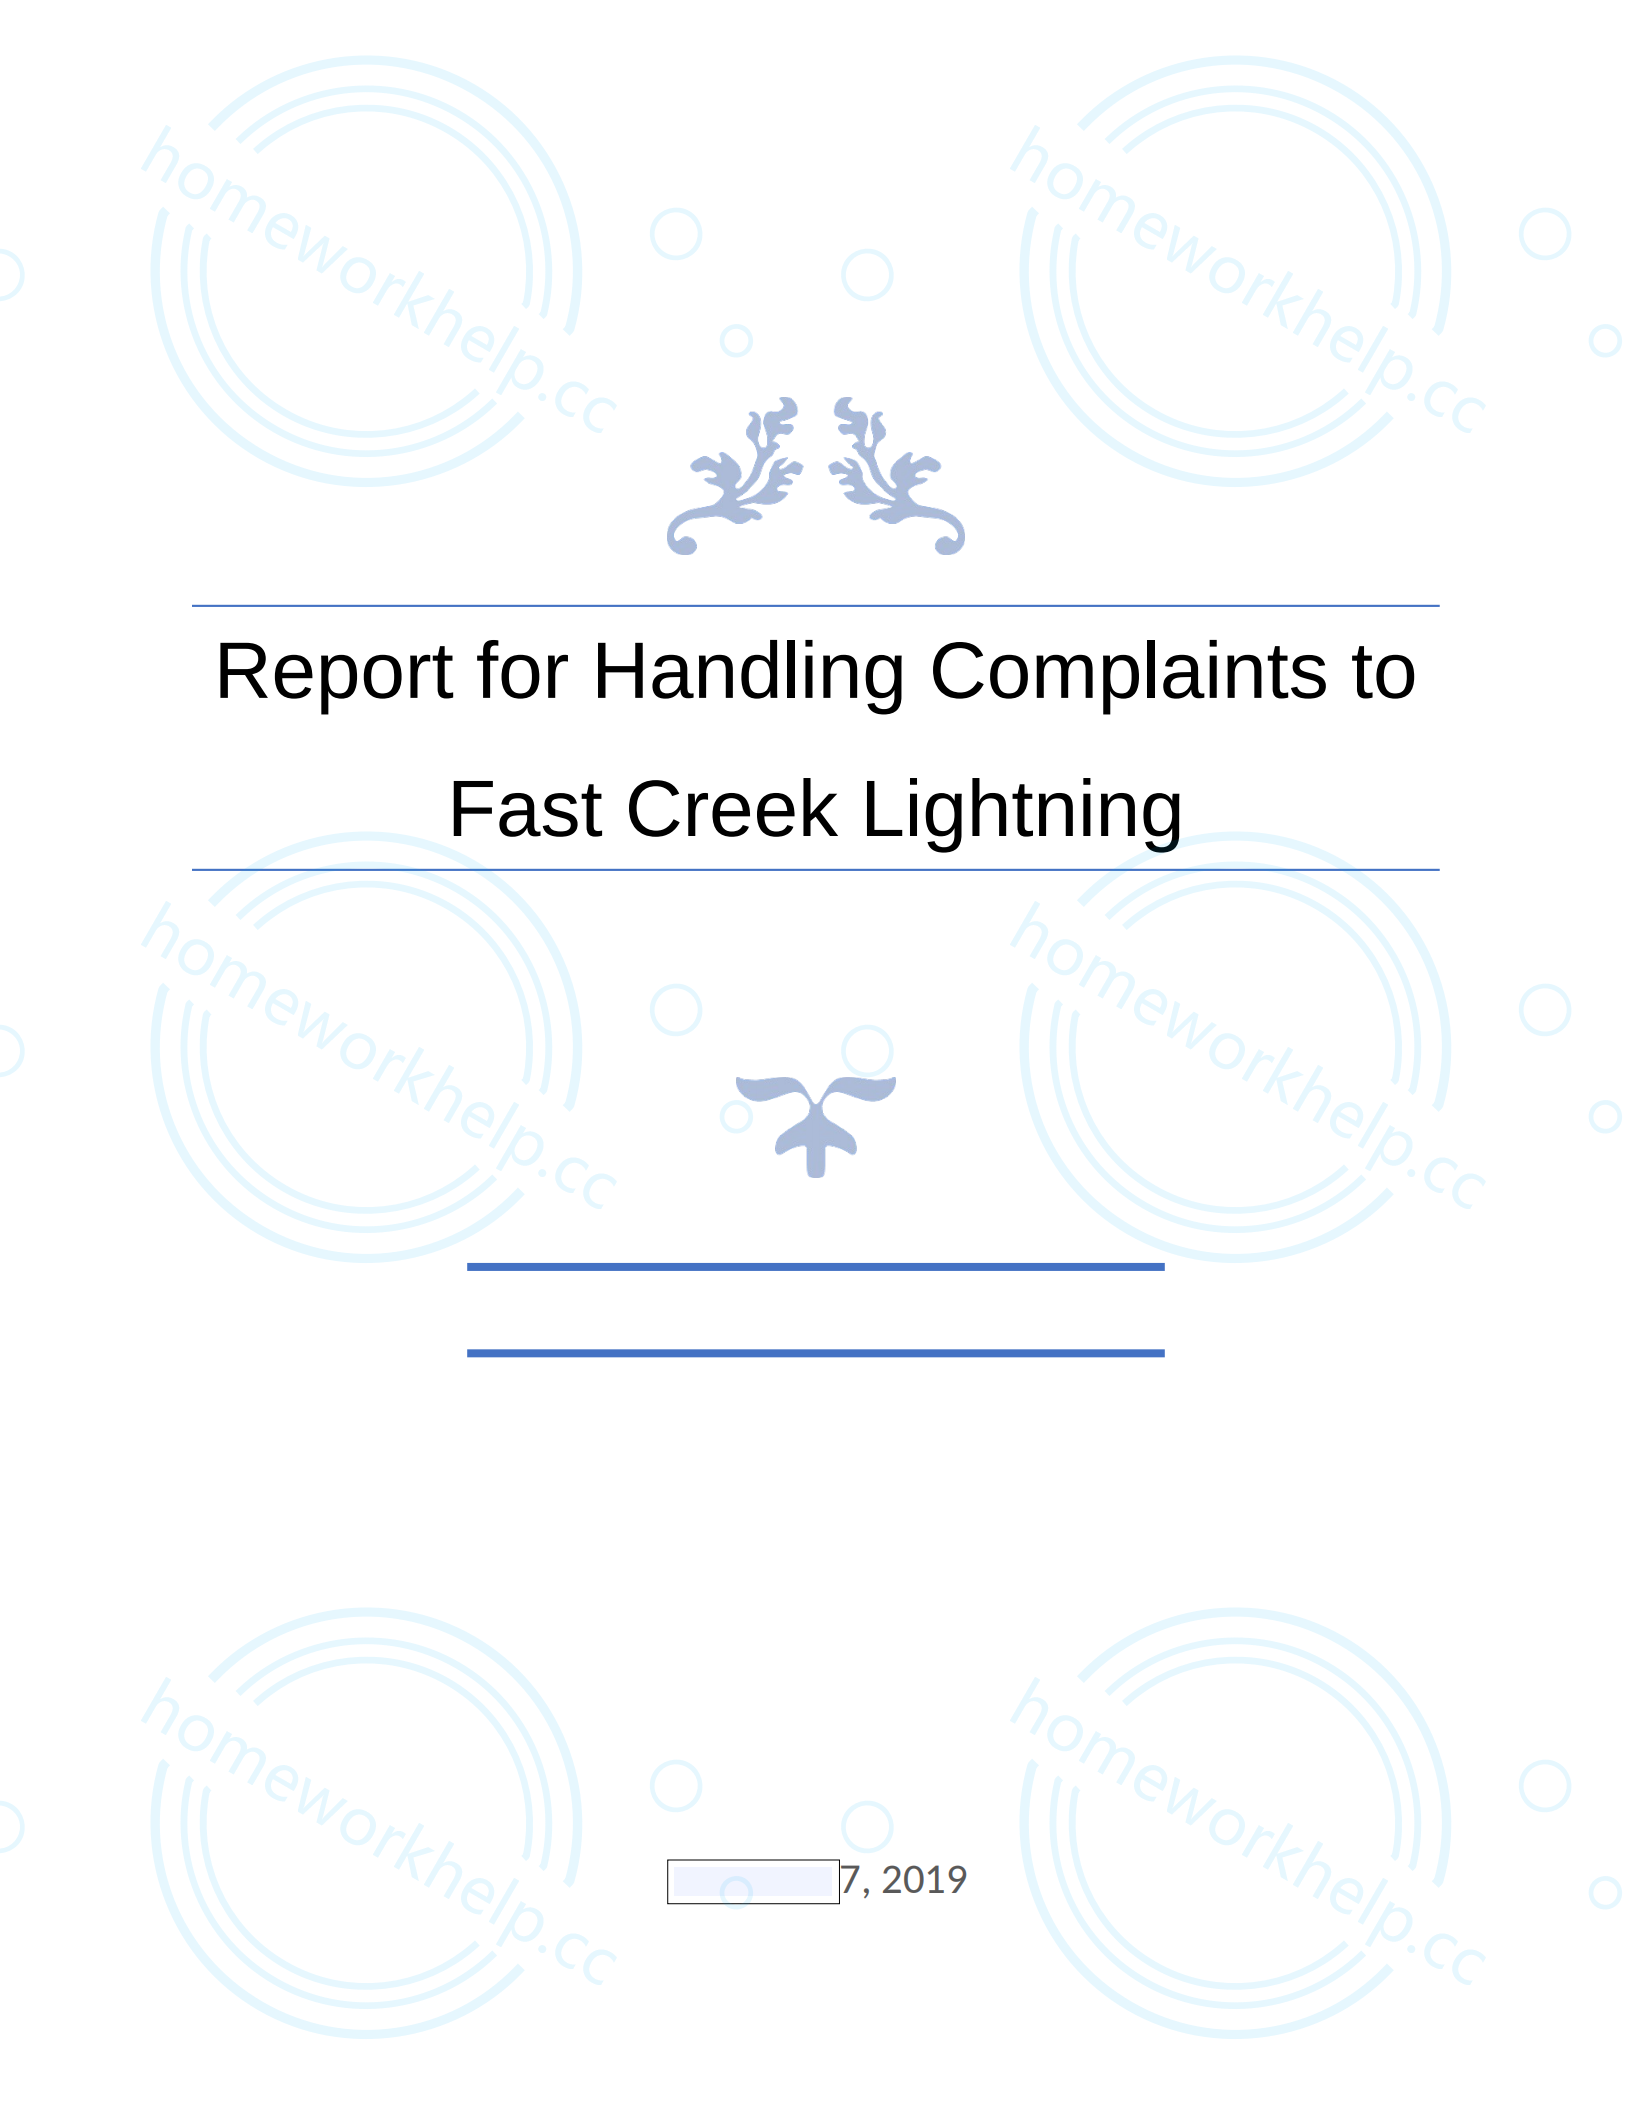 Report for Handling Complaints to Fast Creek Lightning